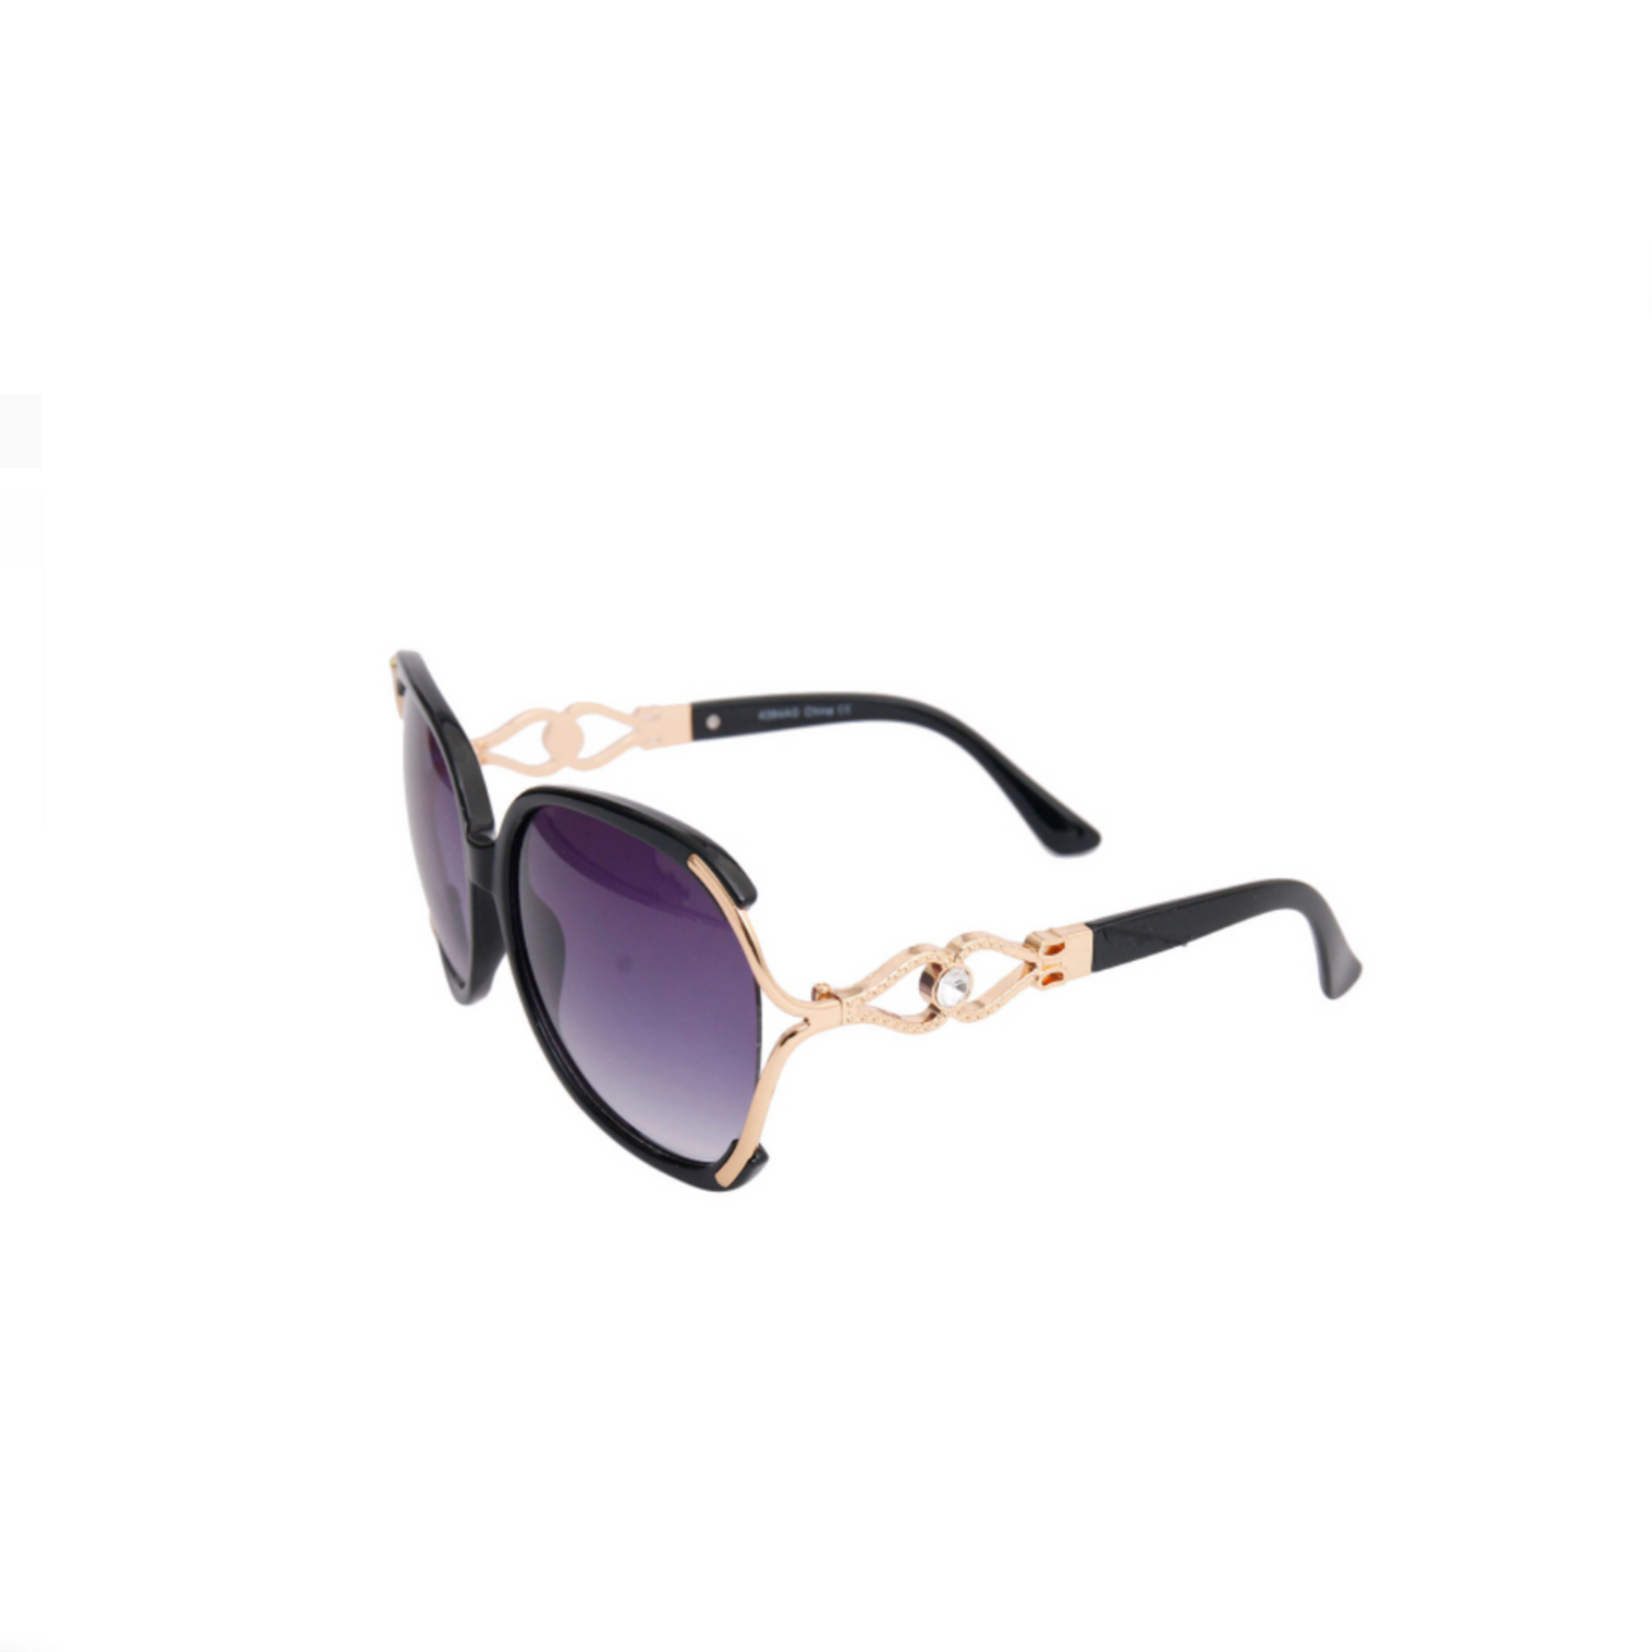 Designer Style Gold Edge Black Rounded Sunglasses